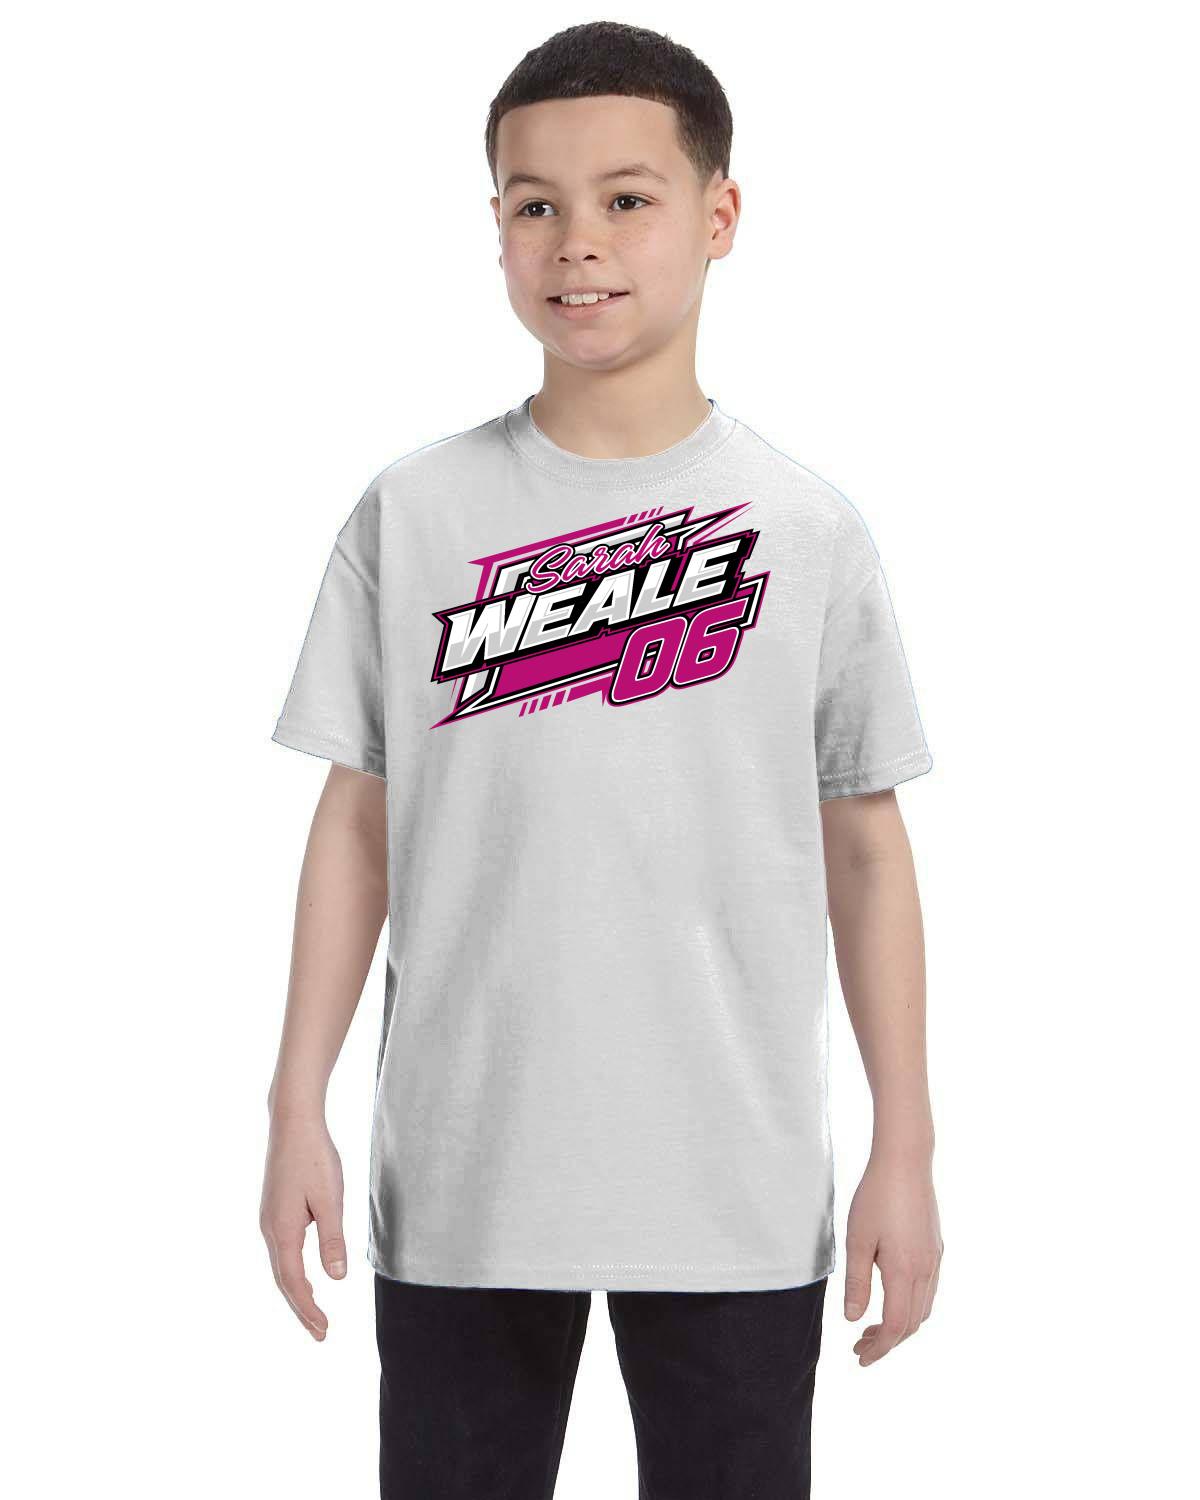 Sarah Weale Racing Youth T-Shirt